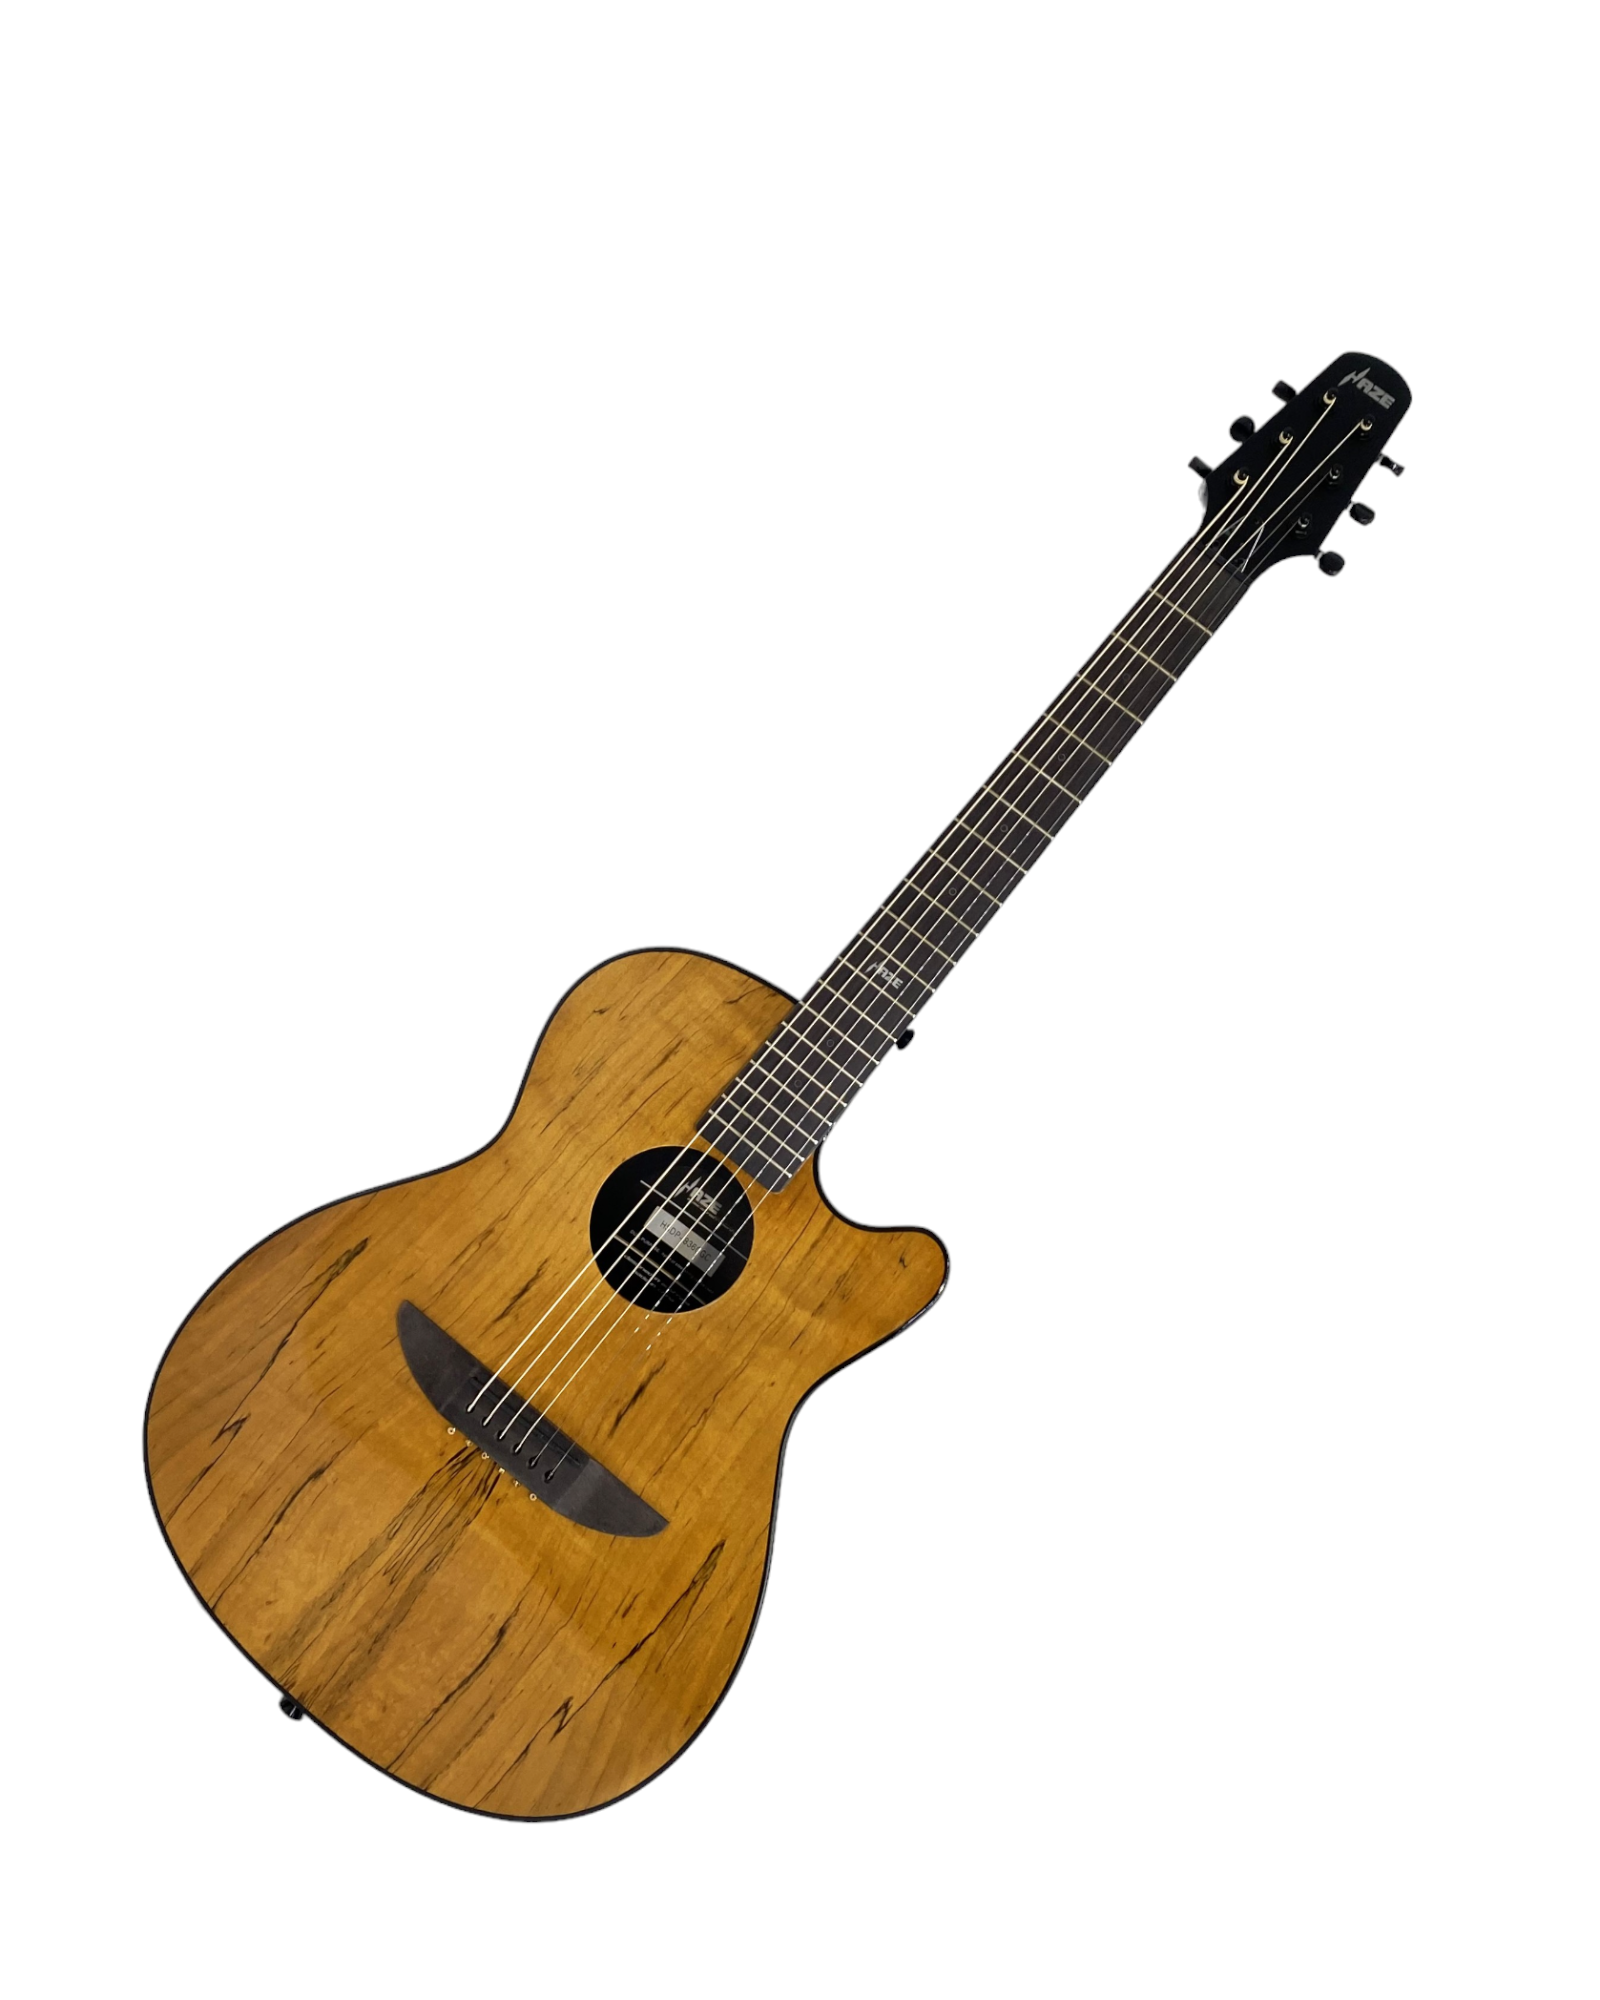 Haze HSDP836CGC Acoustic/Classical Guitar, Spalted Maple Veneer, Round-Back + Free Bag